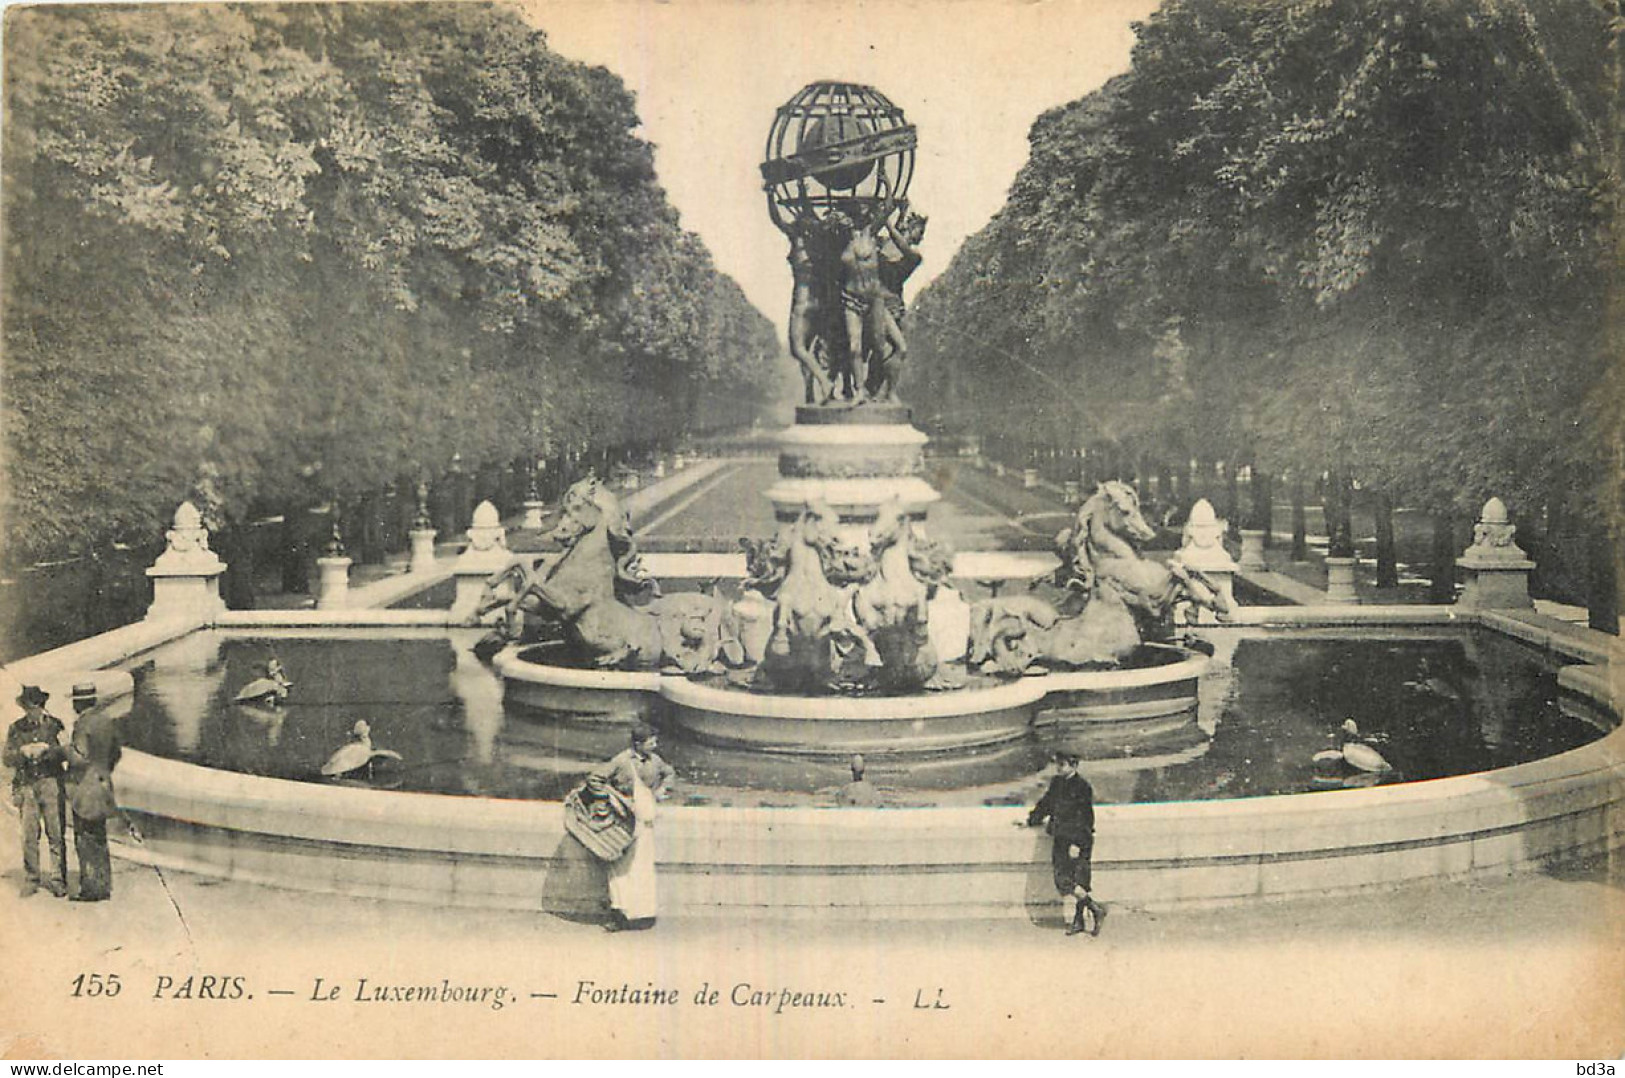 75 - PARIS - LE Luxembourg - FONTAINE DE CARPEAUX - Sonstige Sehenswürdigkeiten